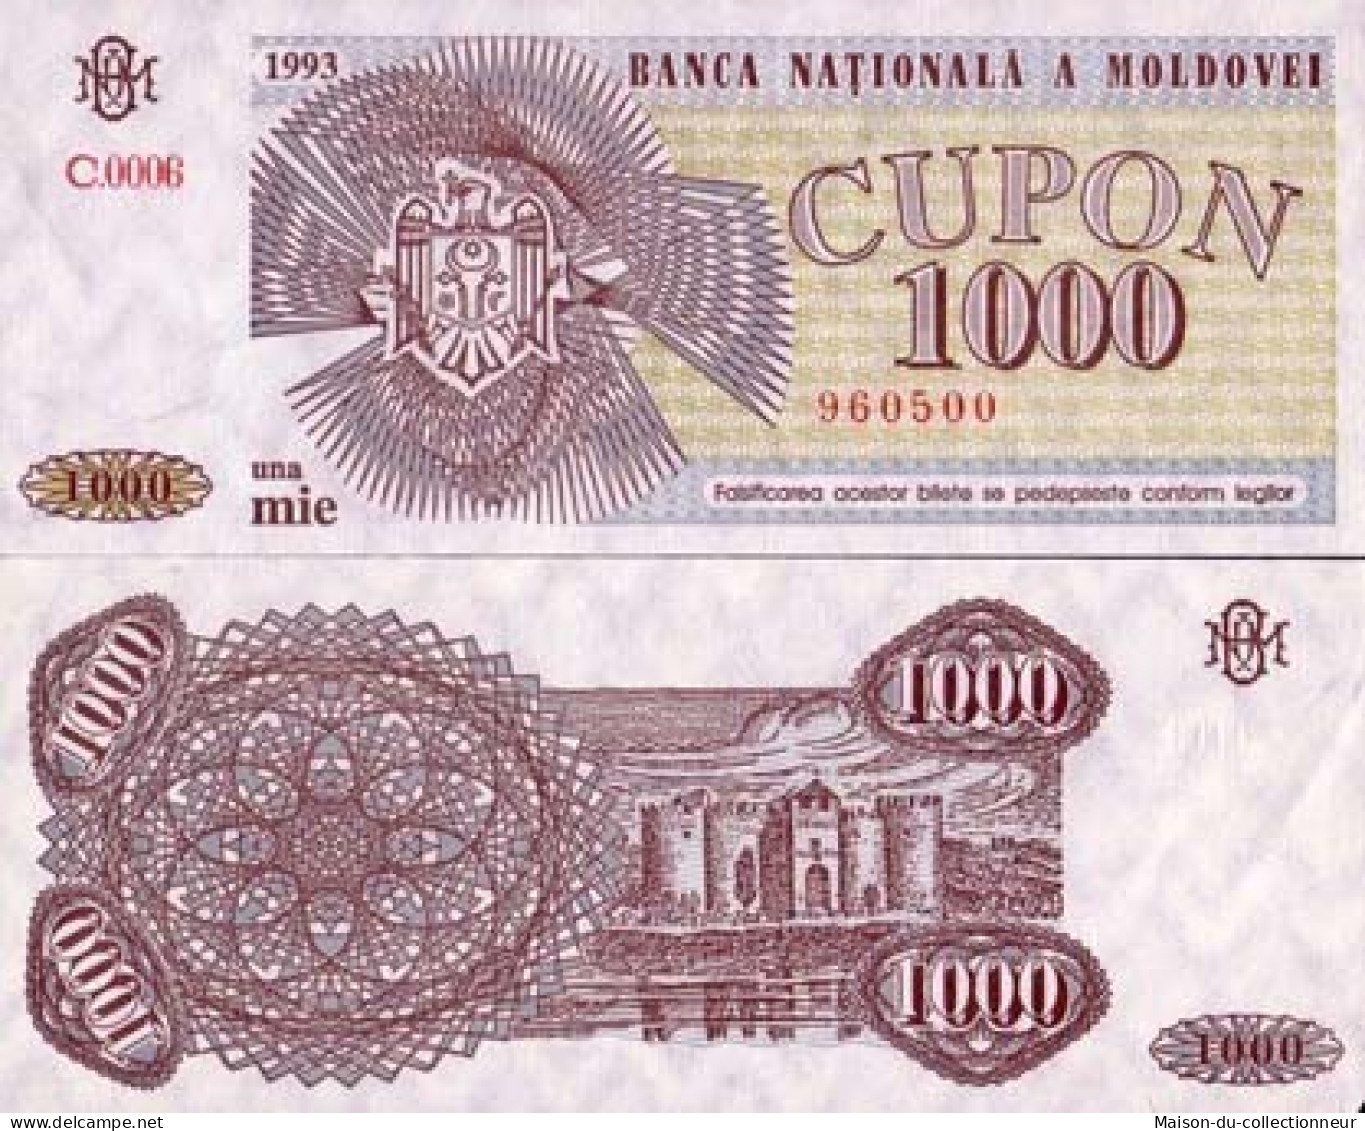 Billets Banque Moldavie Pk N°  3 - 1000 Cupon - Moldavia